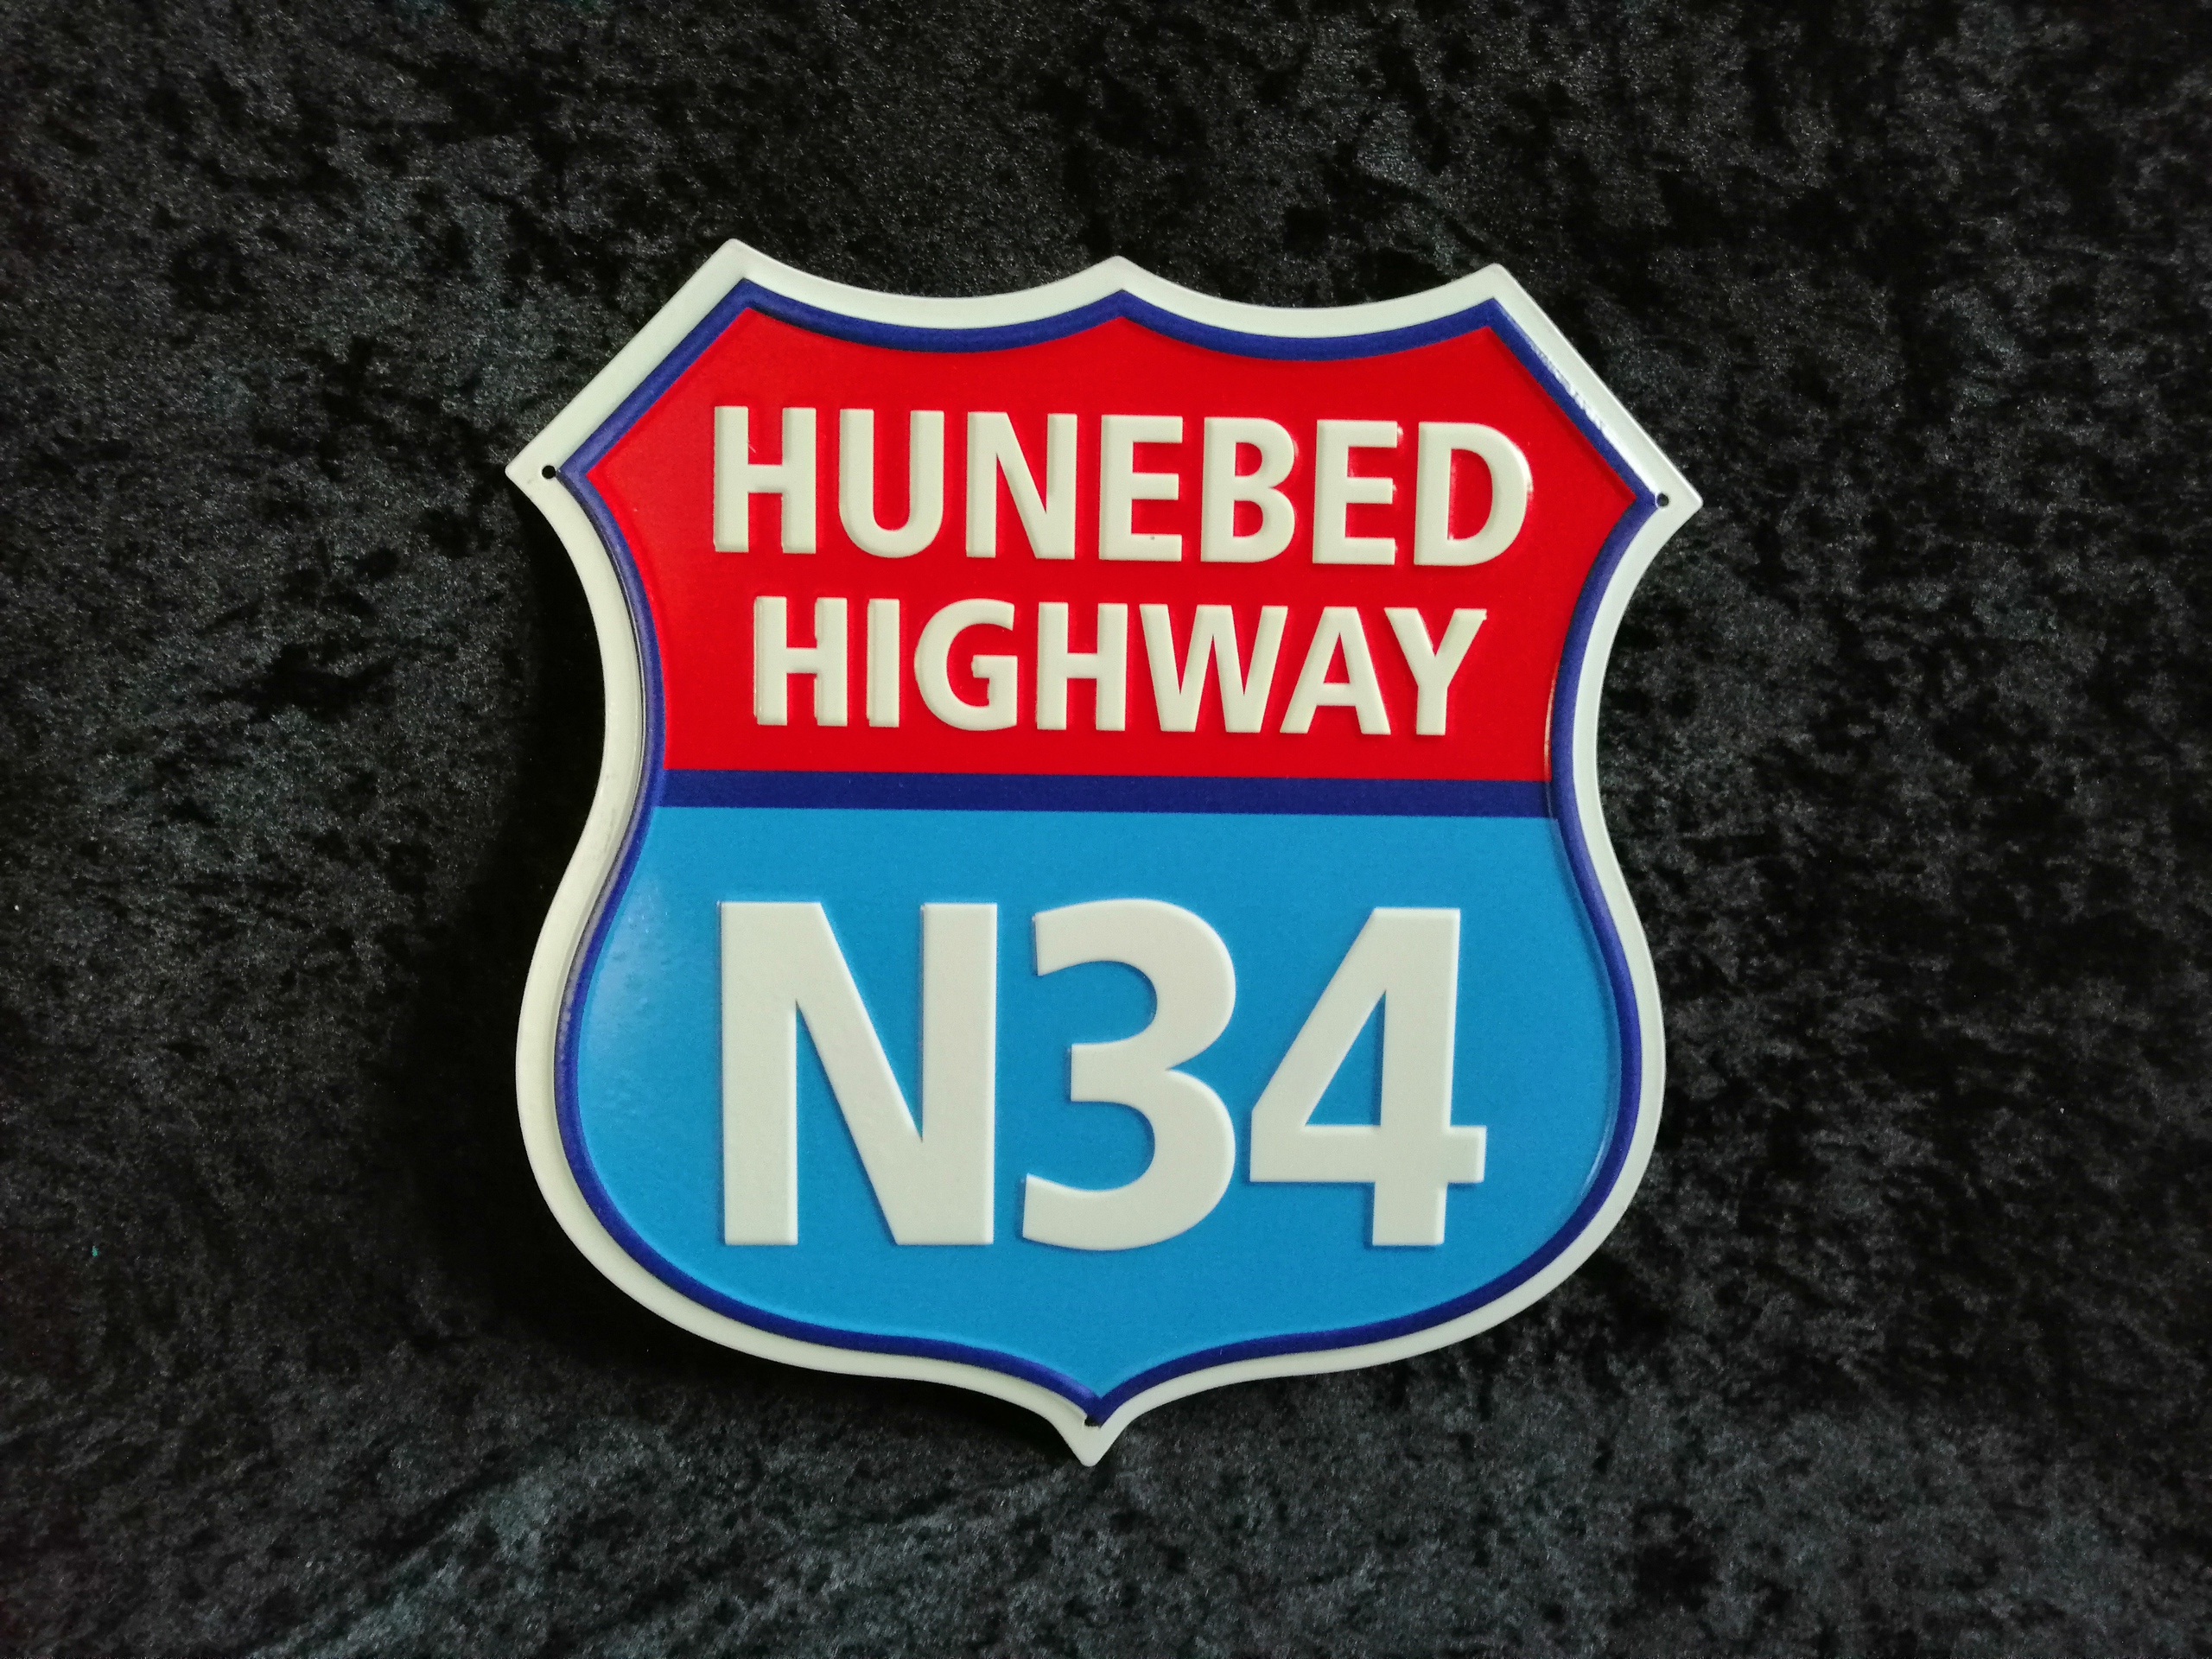 Hunebed Highway N34 bord